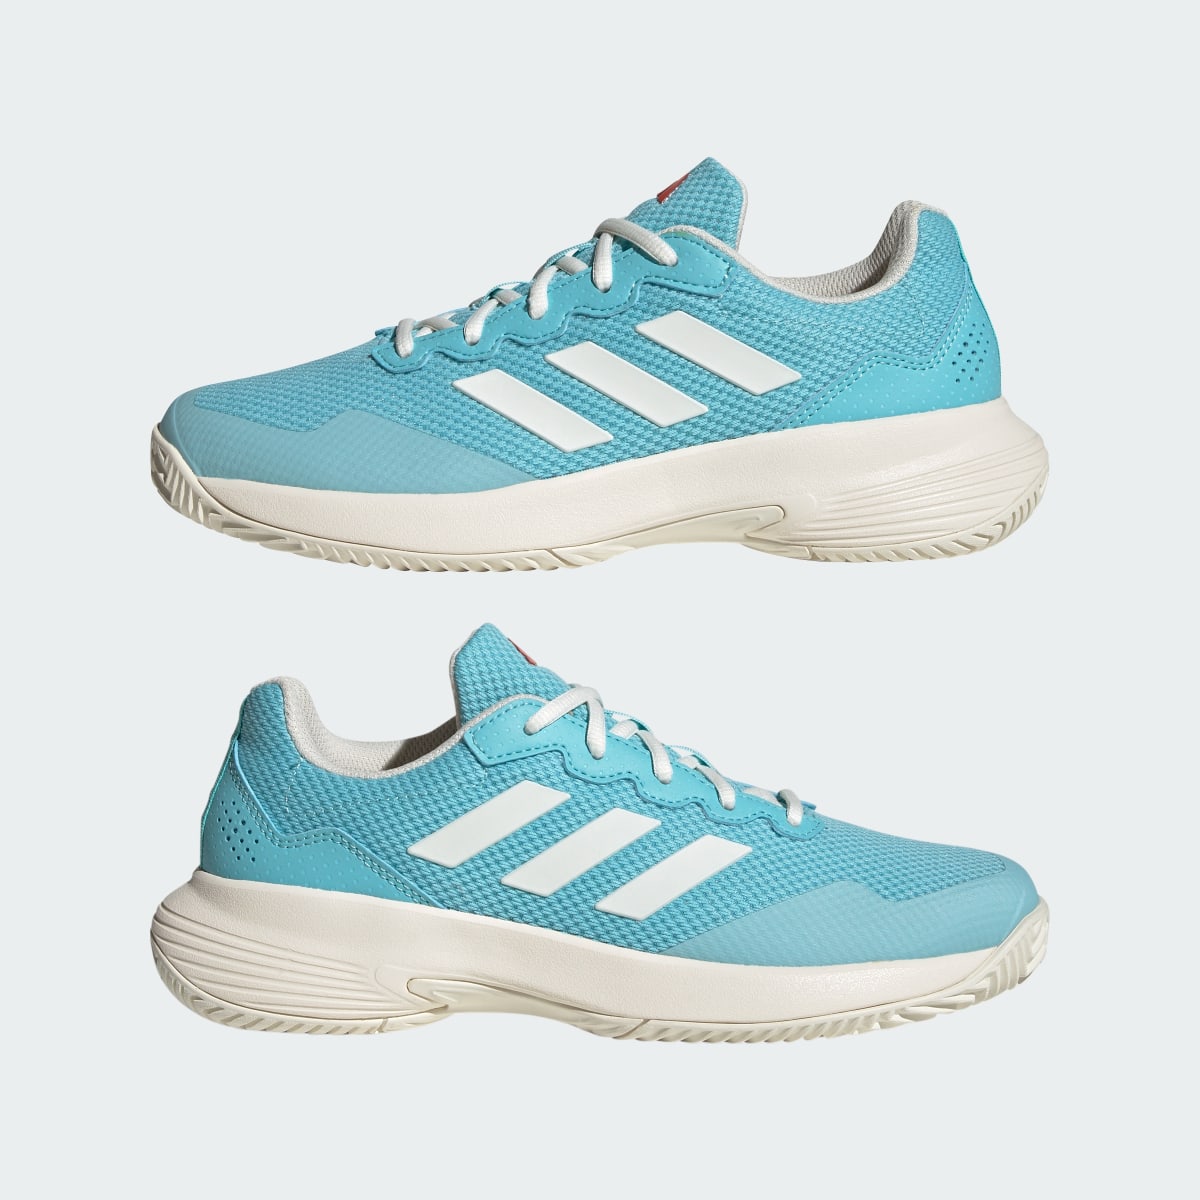 Adidas Gamecourt 2.0 Tennis Shoes. 8